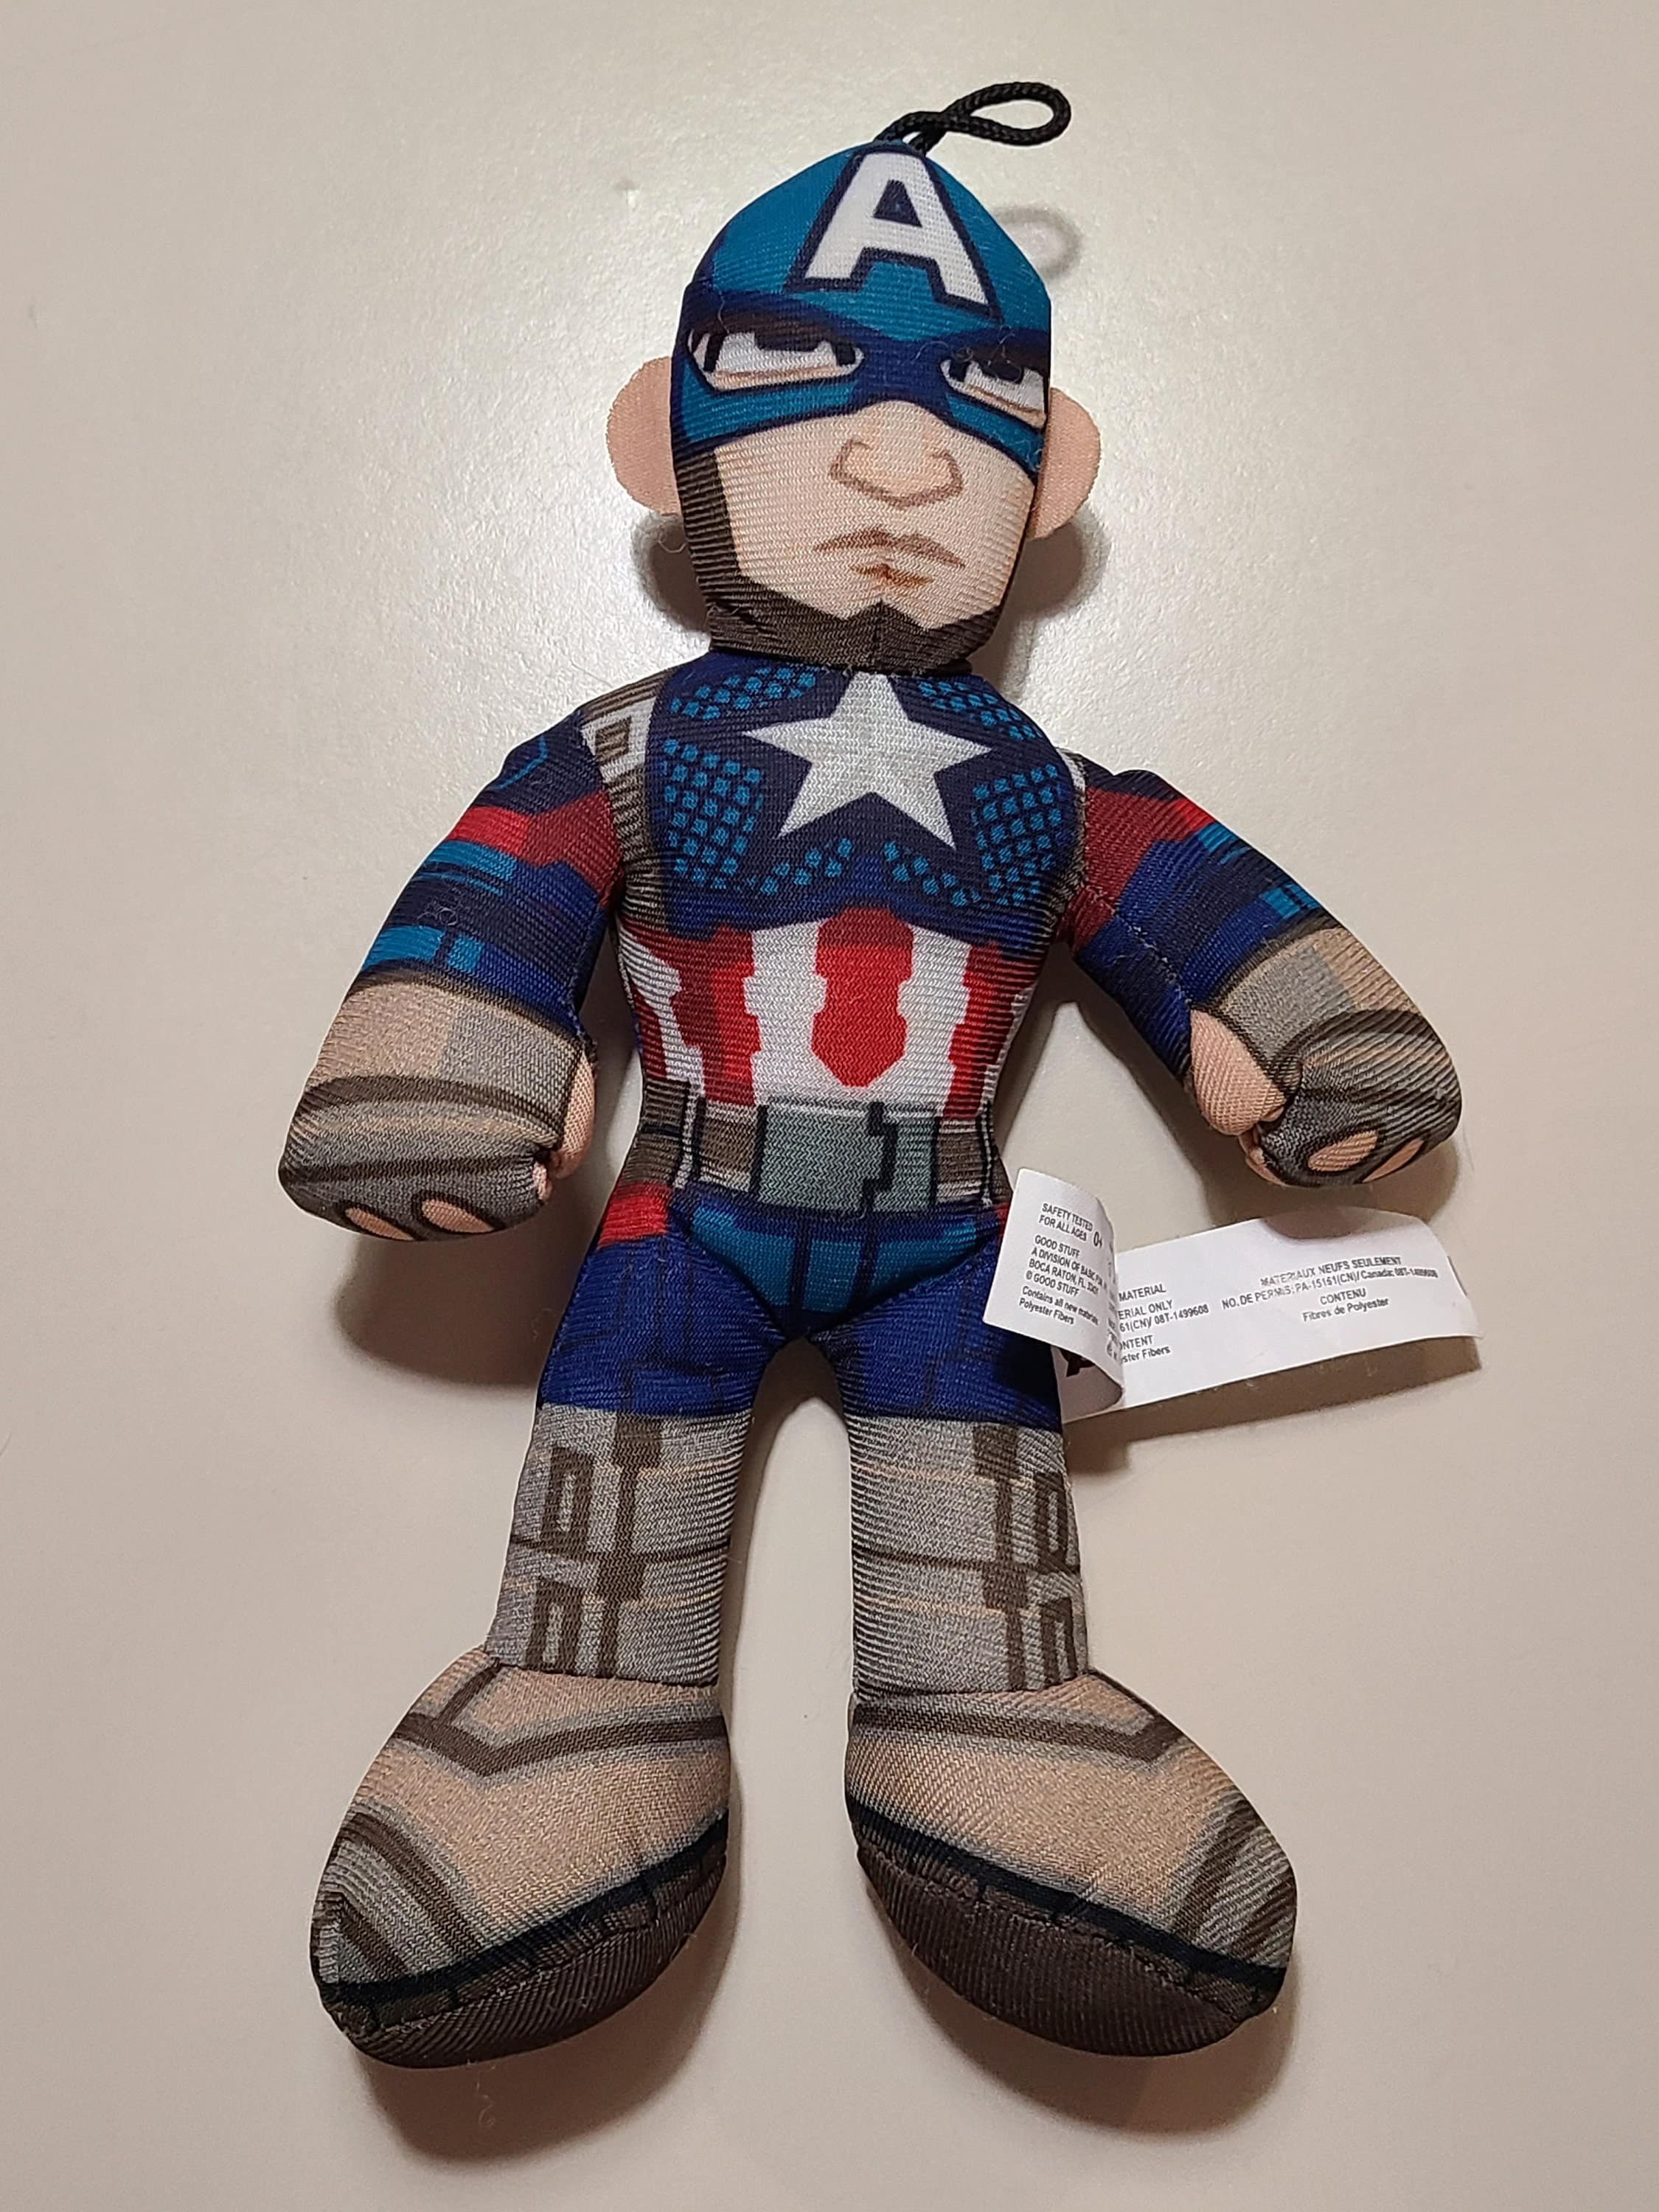 10 Inch Plush Stuffed Captain America Doll, From Avengers, Good